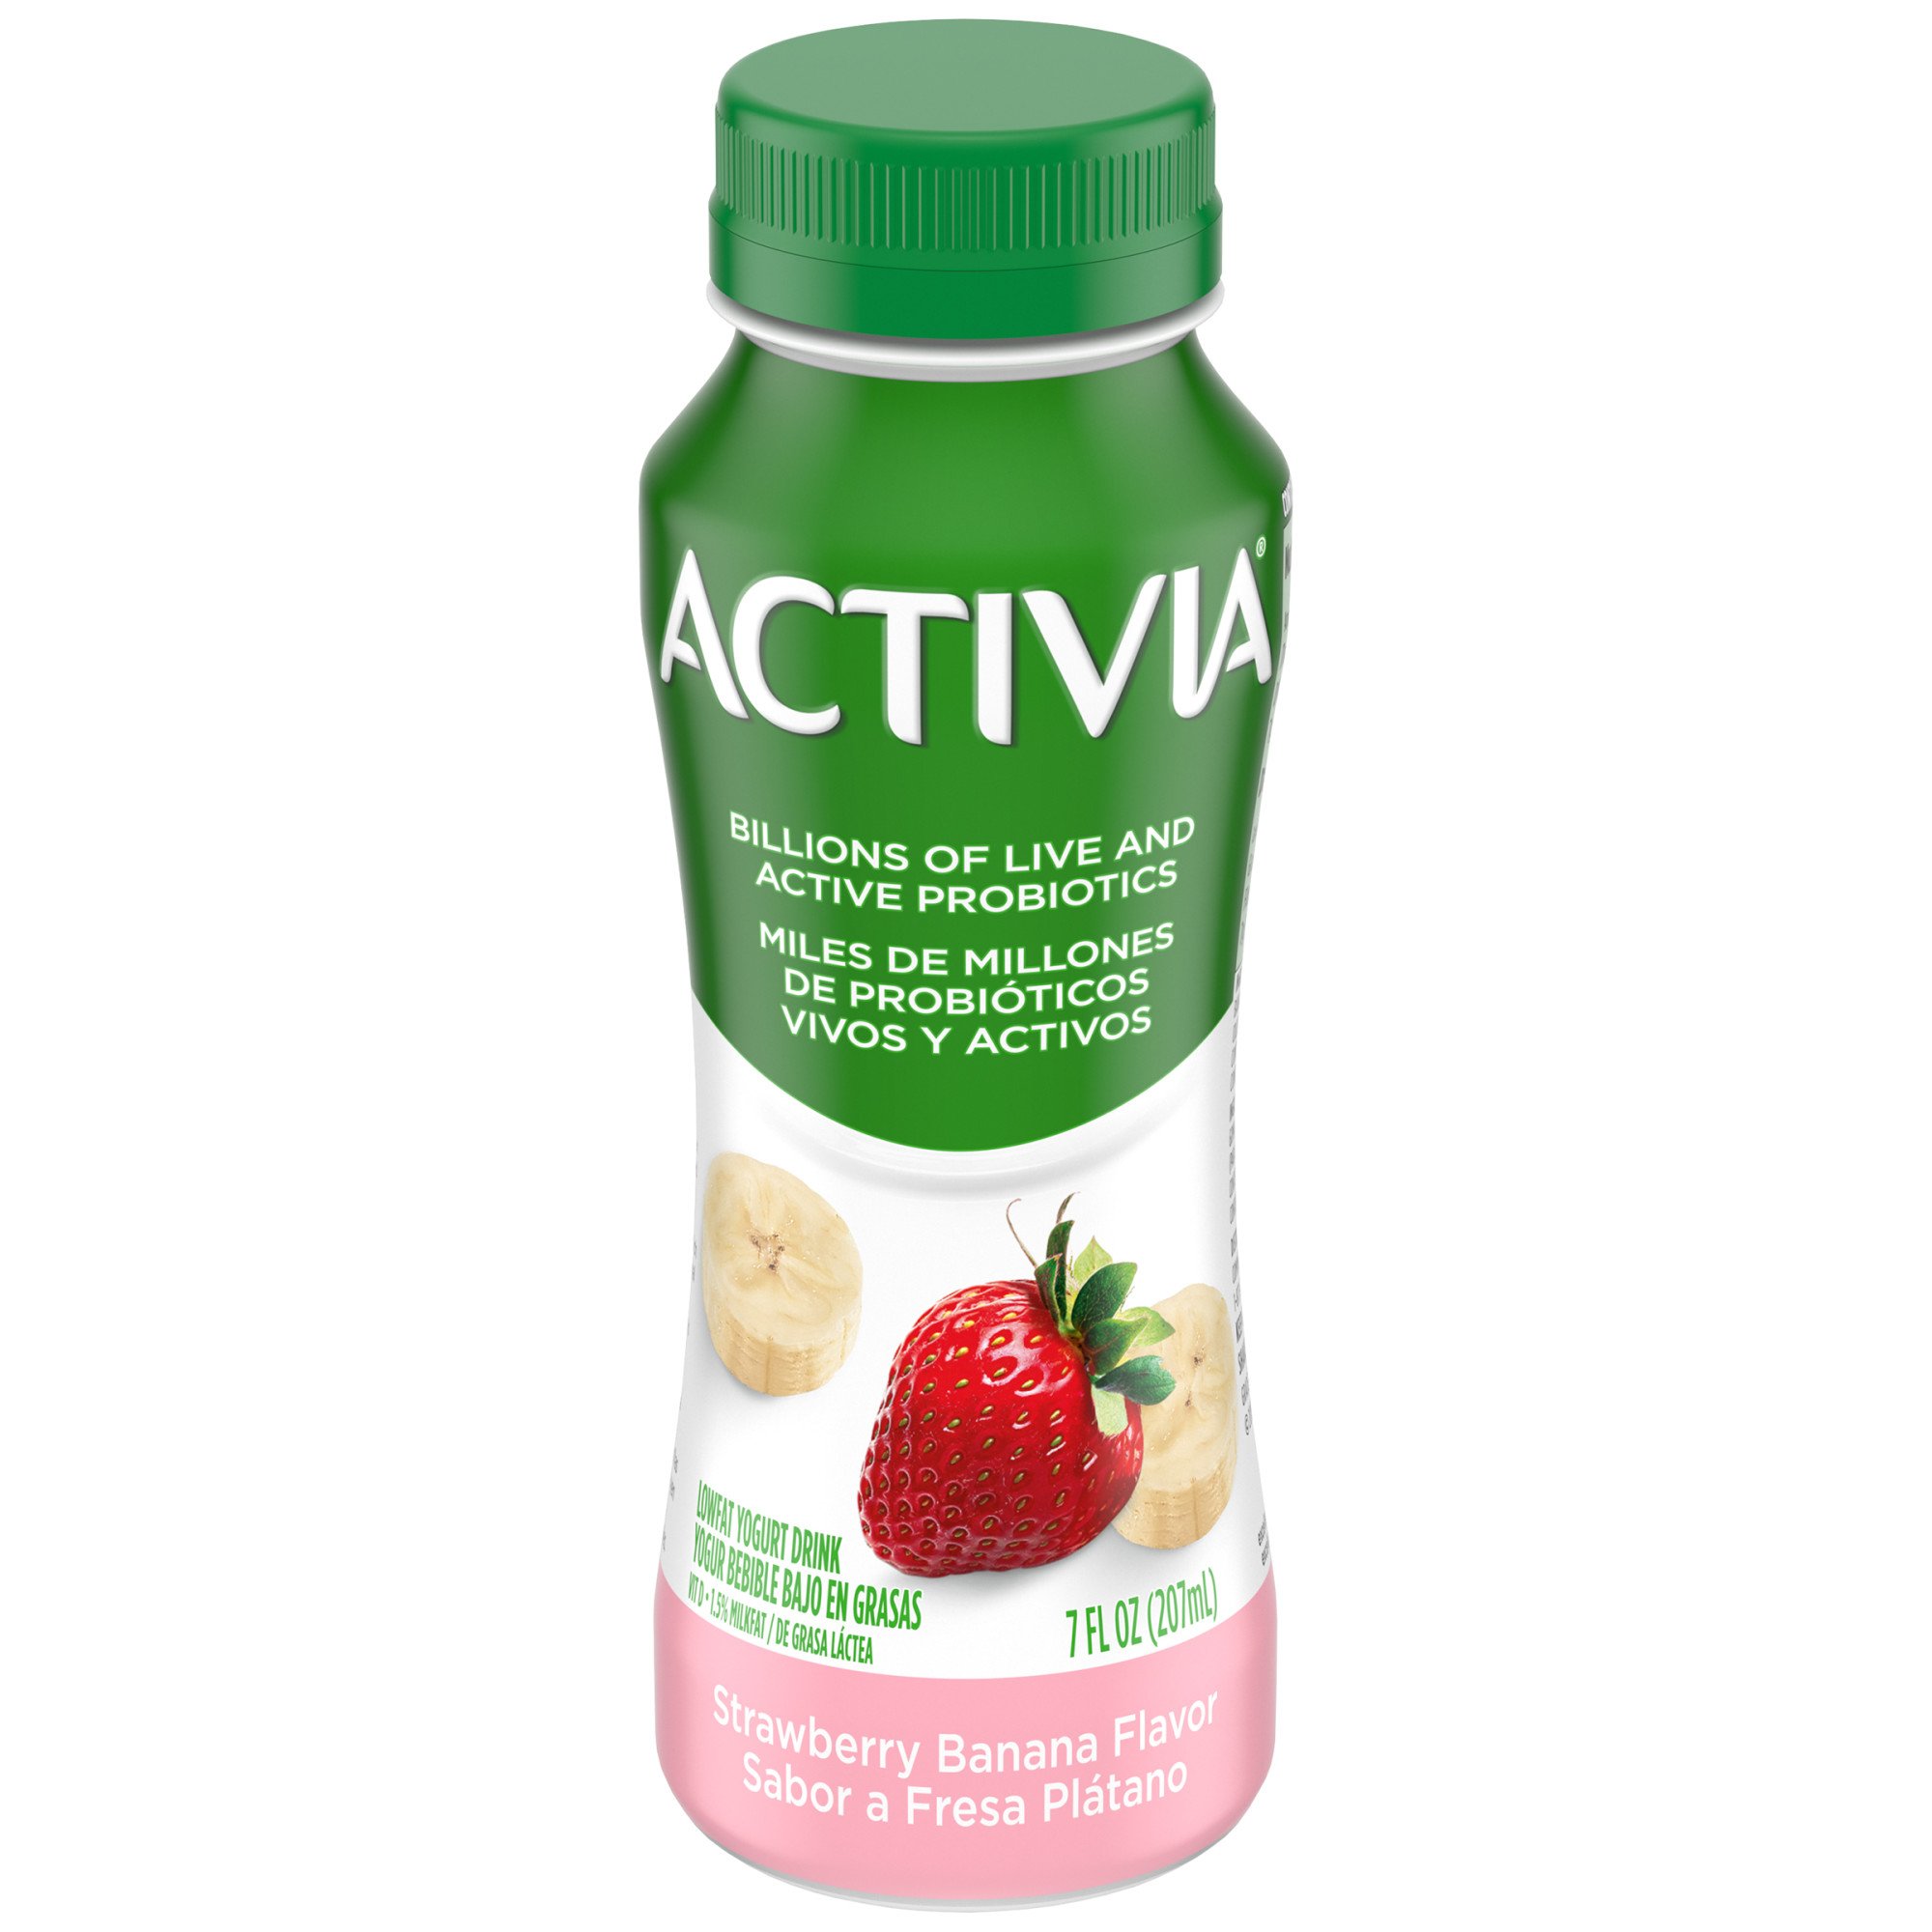 Activia Probiotic Strawberry Banana Dairy Drink - Shop Yogurt at H-E-B